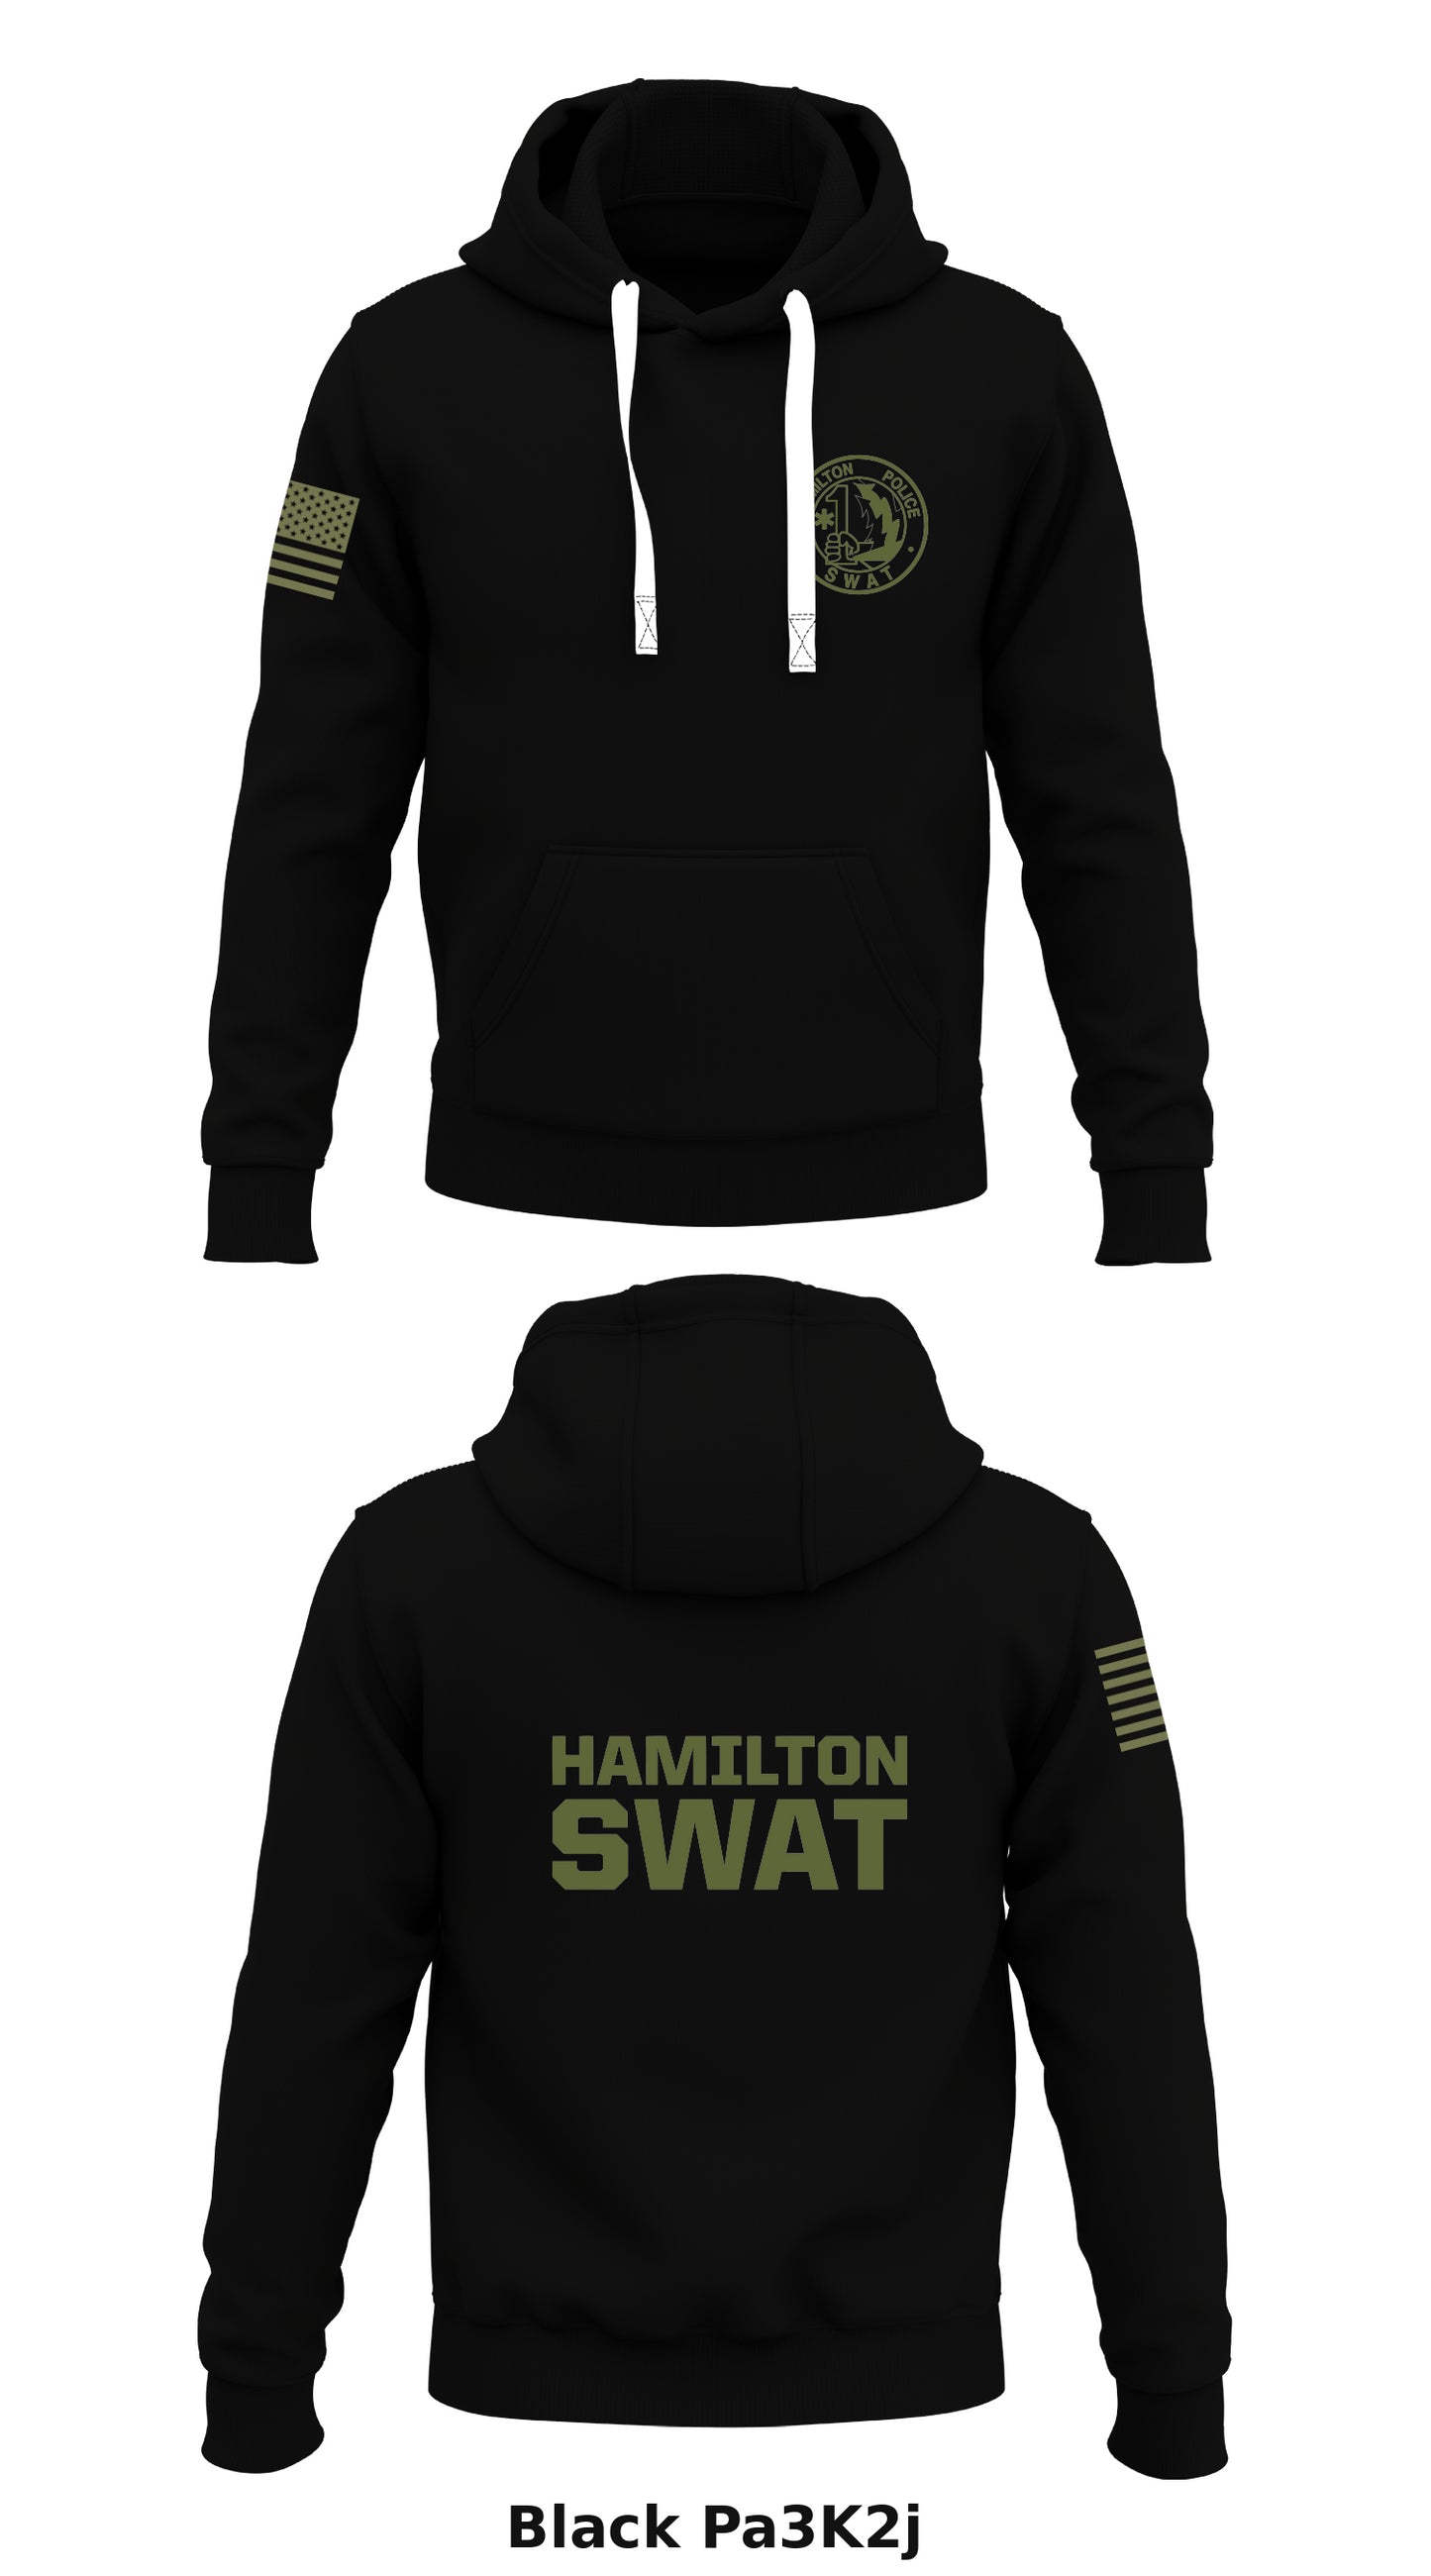 HAMILTON SWAT Store 1  Core Men's Hooded Performance Sweatshirt - Pa3K2j